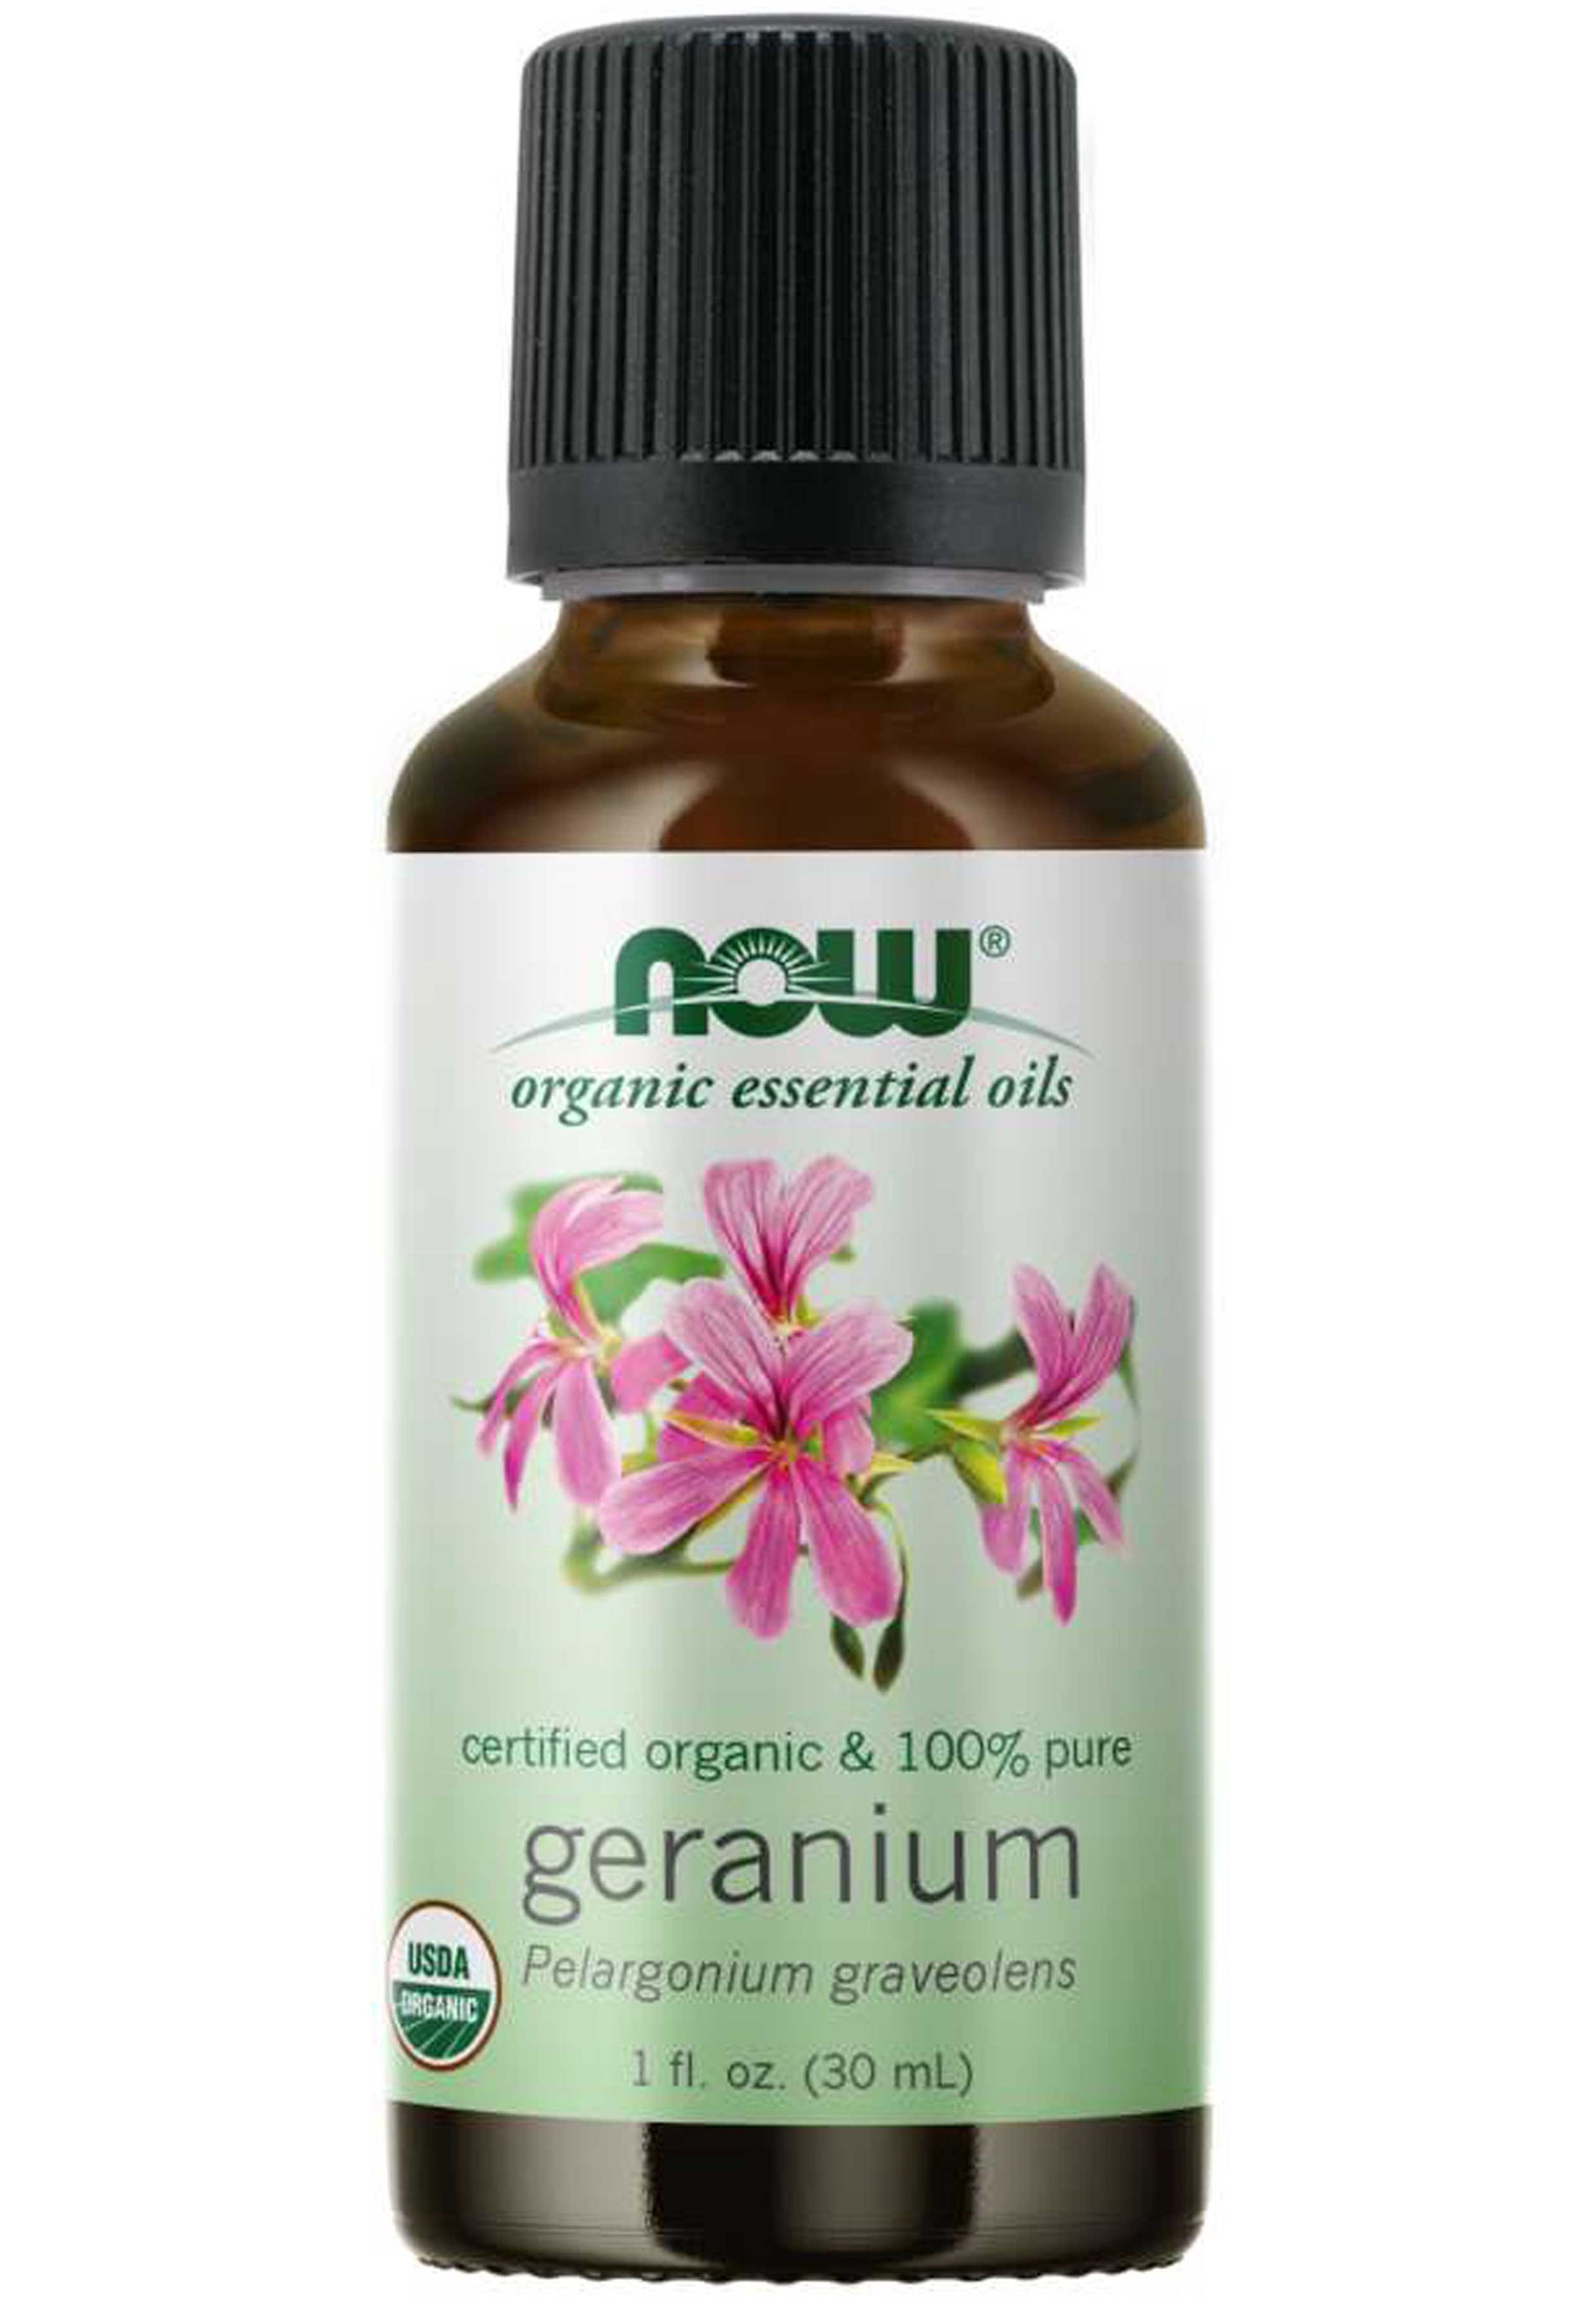 NOW Organic Essential Oils Geranium Oil – Supplement First